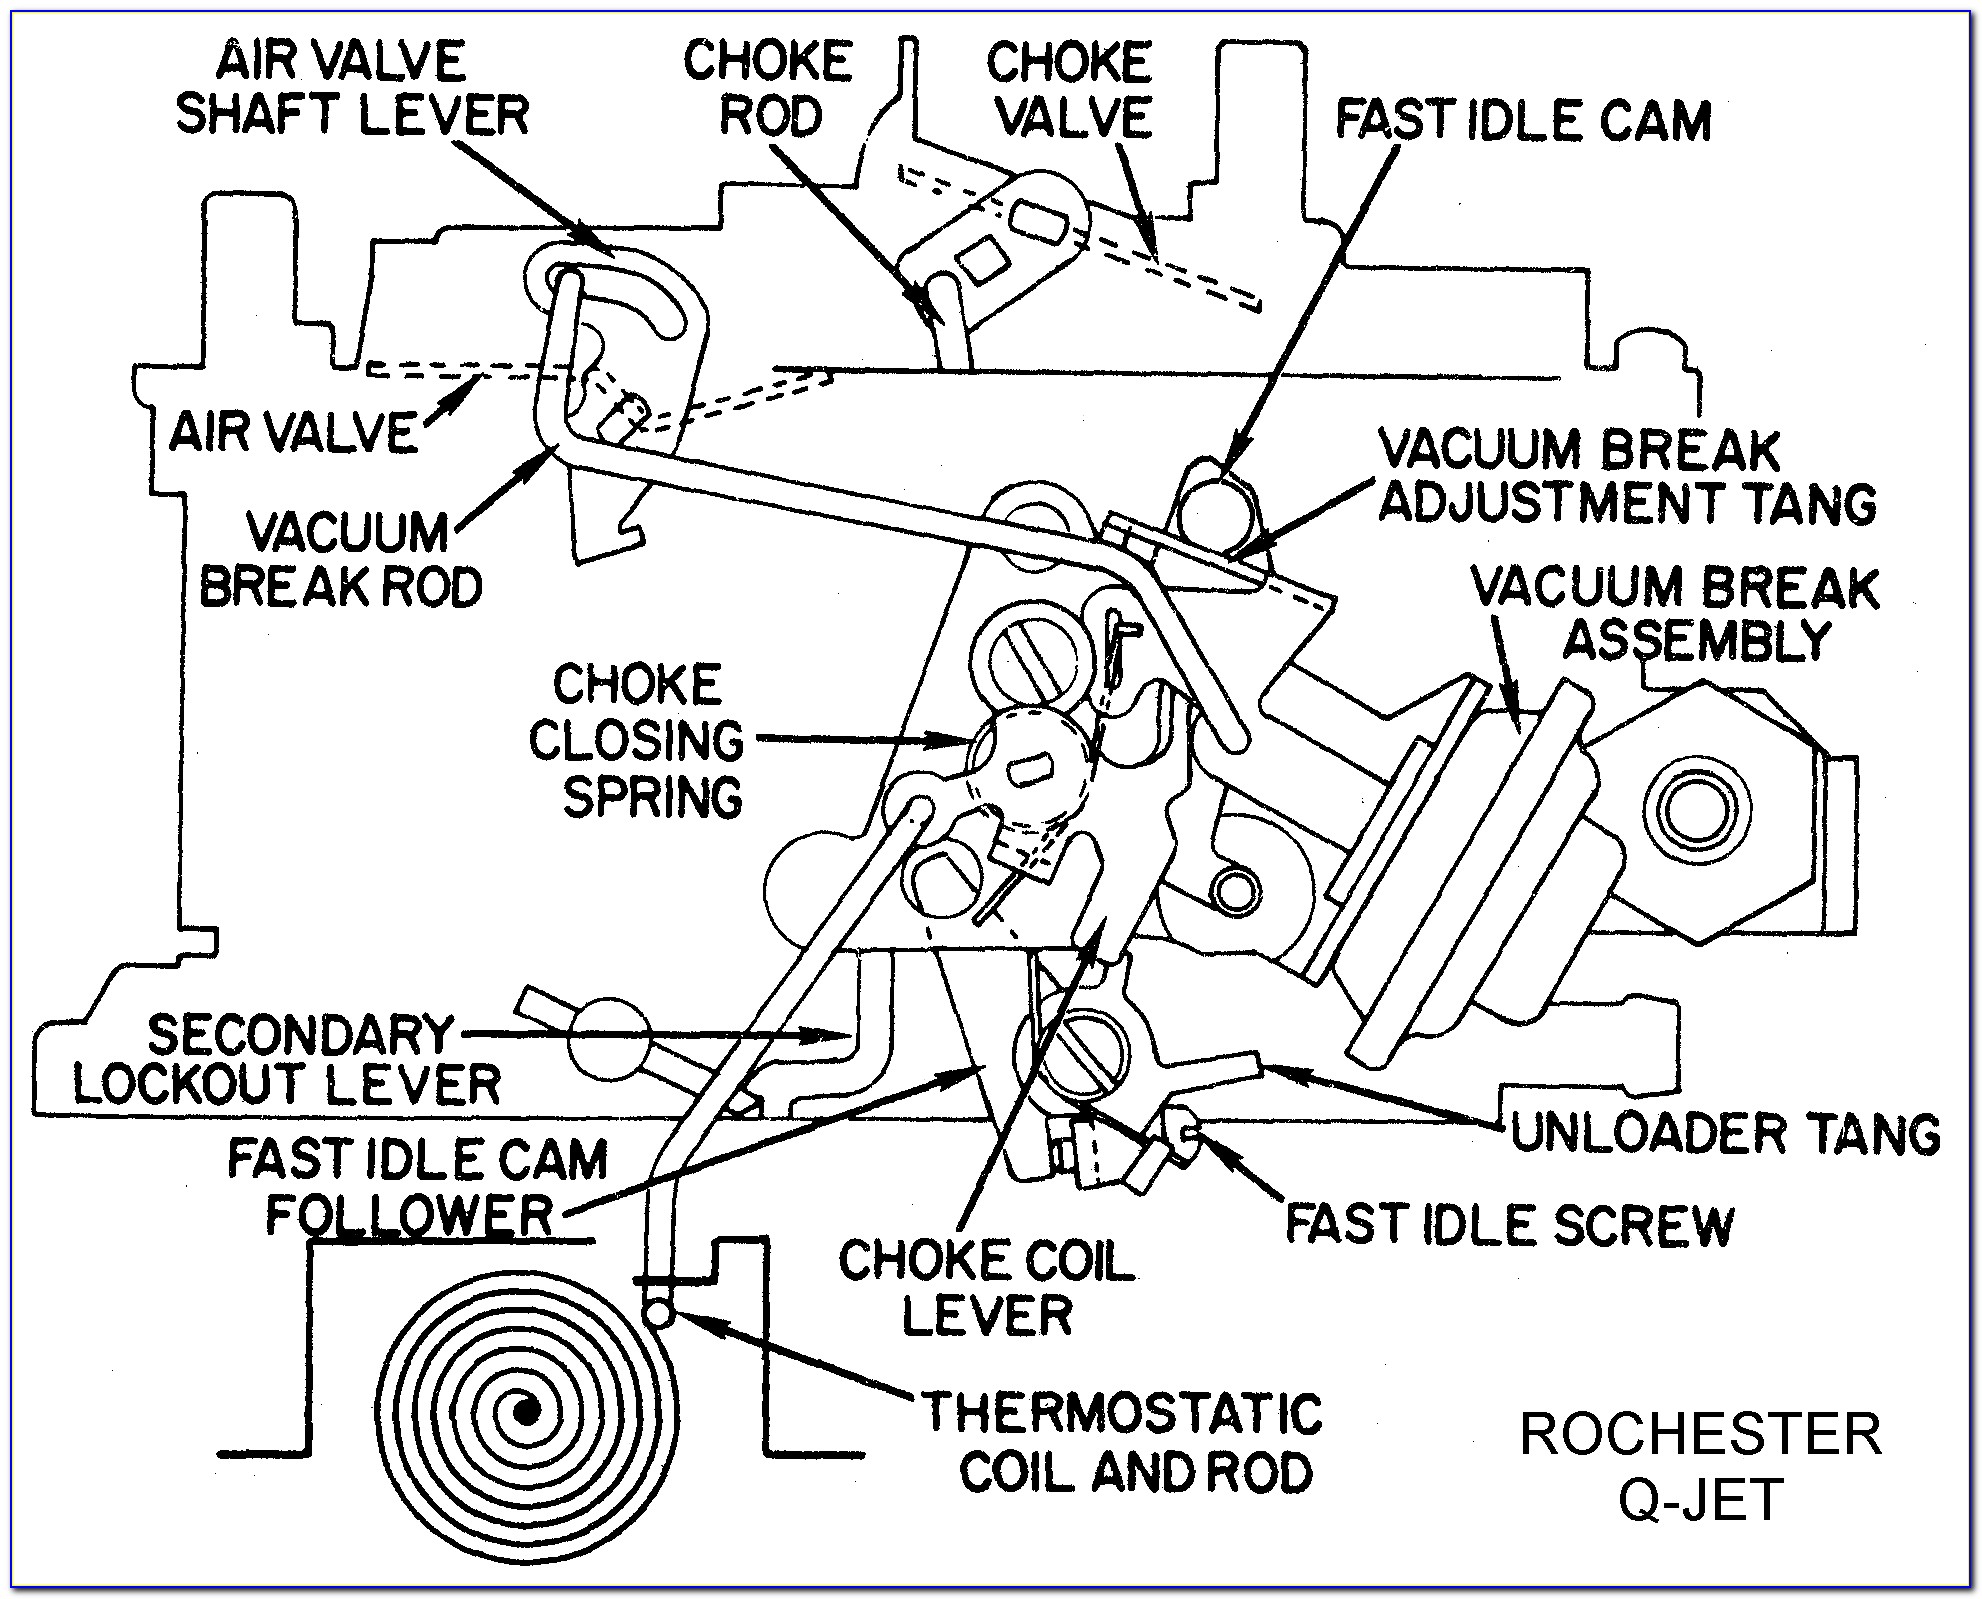 Rochester Quadrajet Carburetor Choke Adjustment